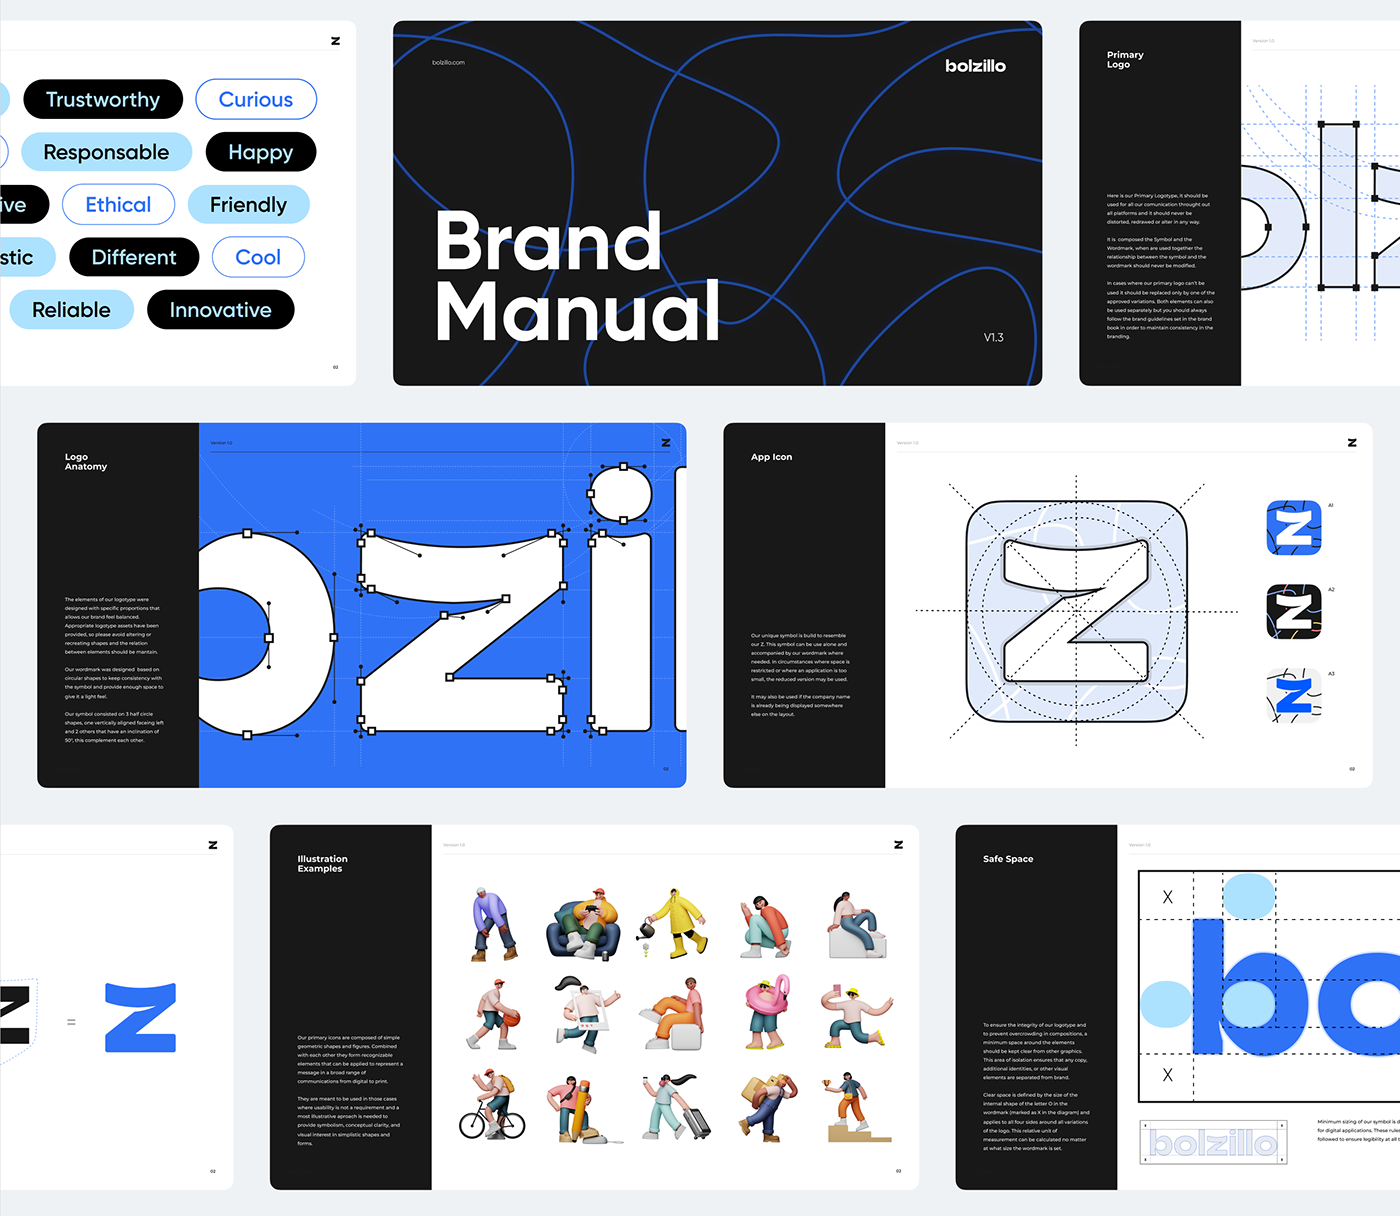 brand attributes, primary logotype, logo anatomy, app icon, 3D illustrations samples, and logo 